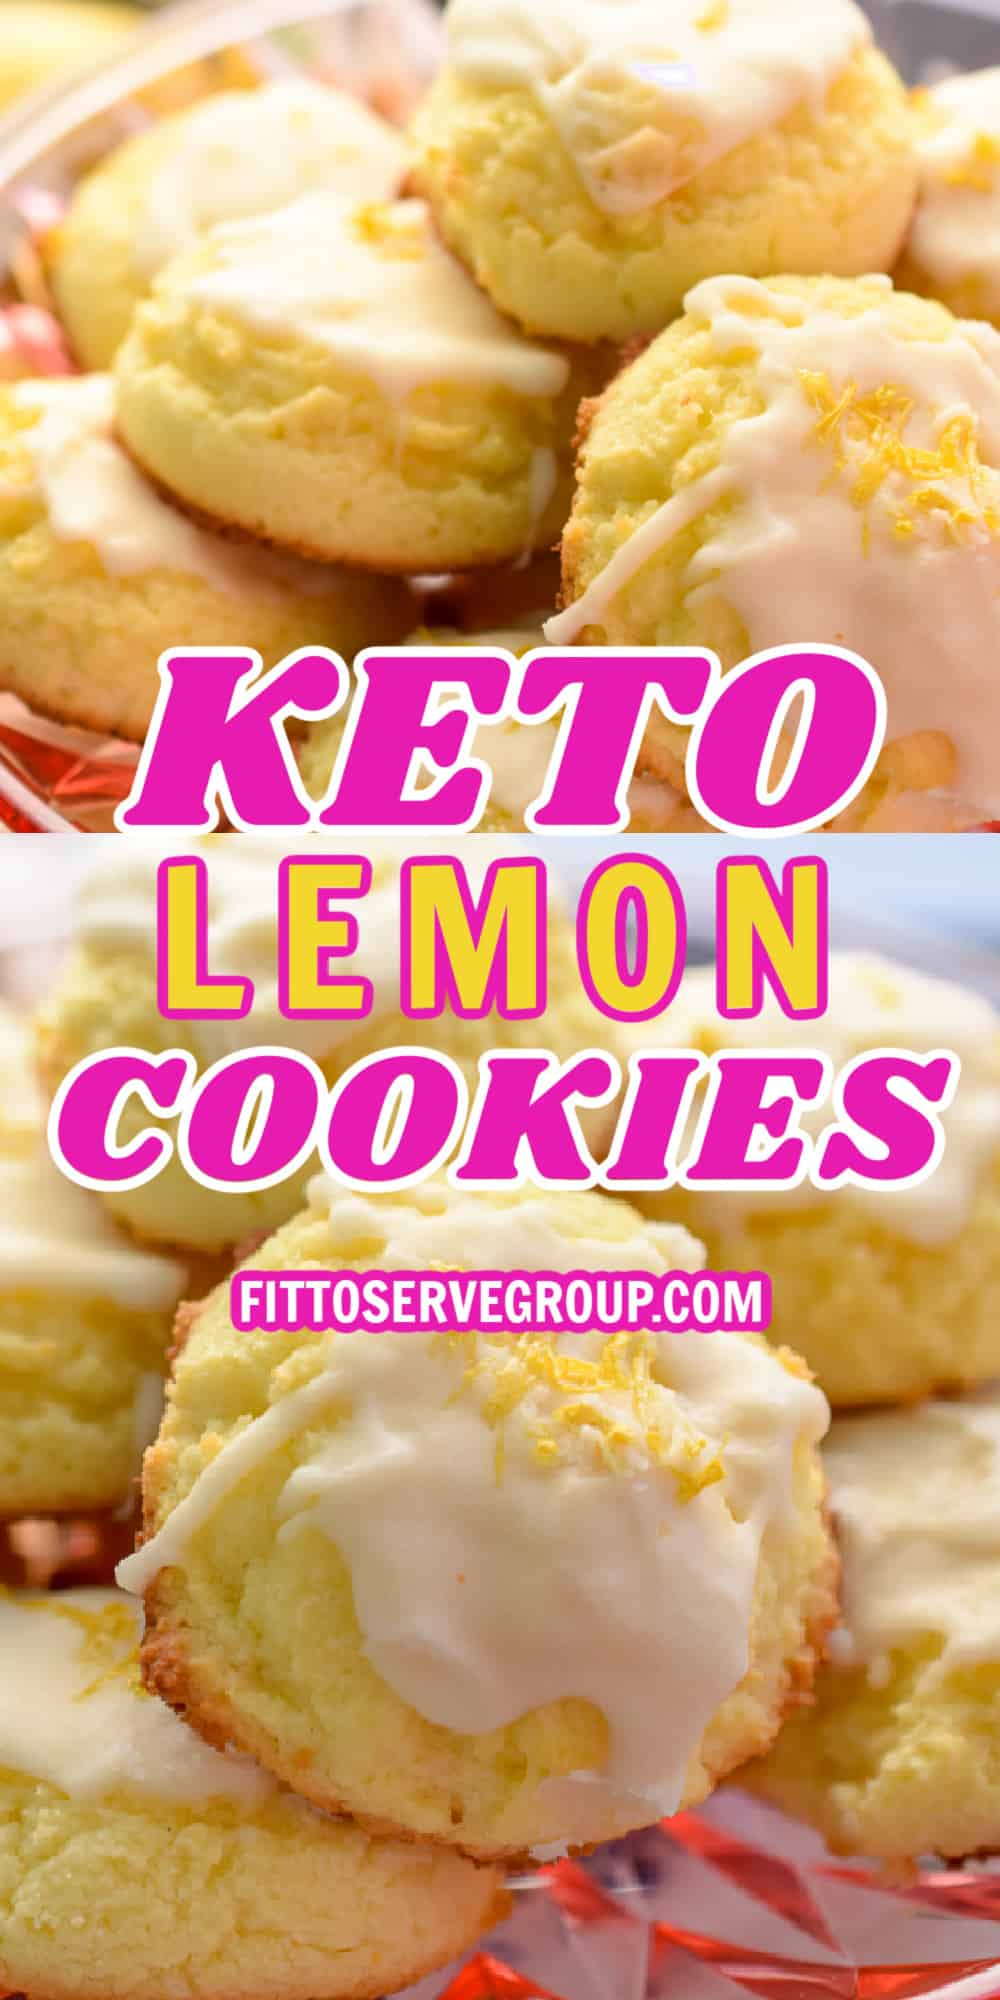 Keto lemon cookies on pink clear plates